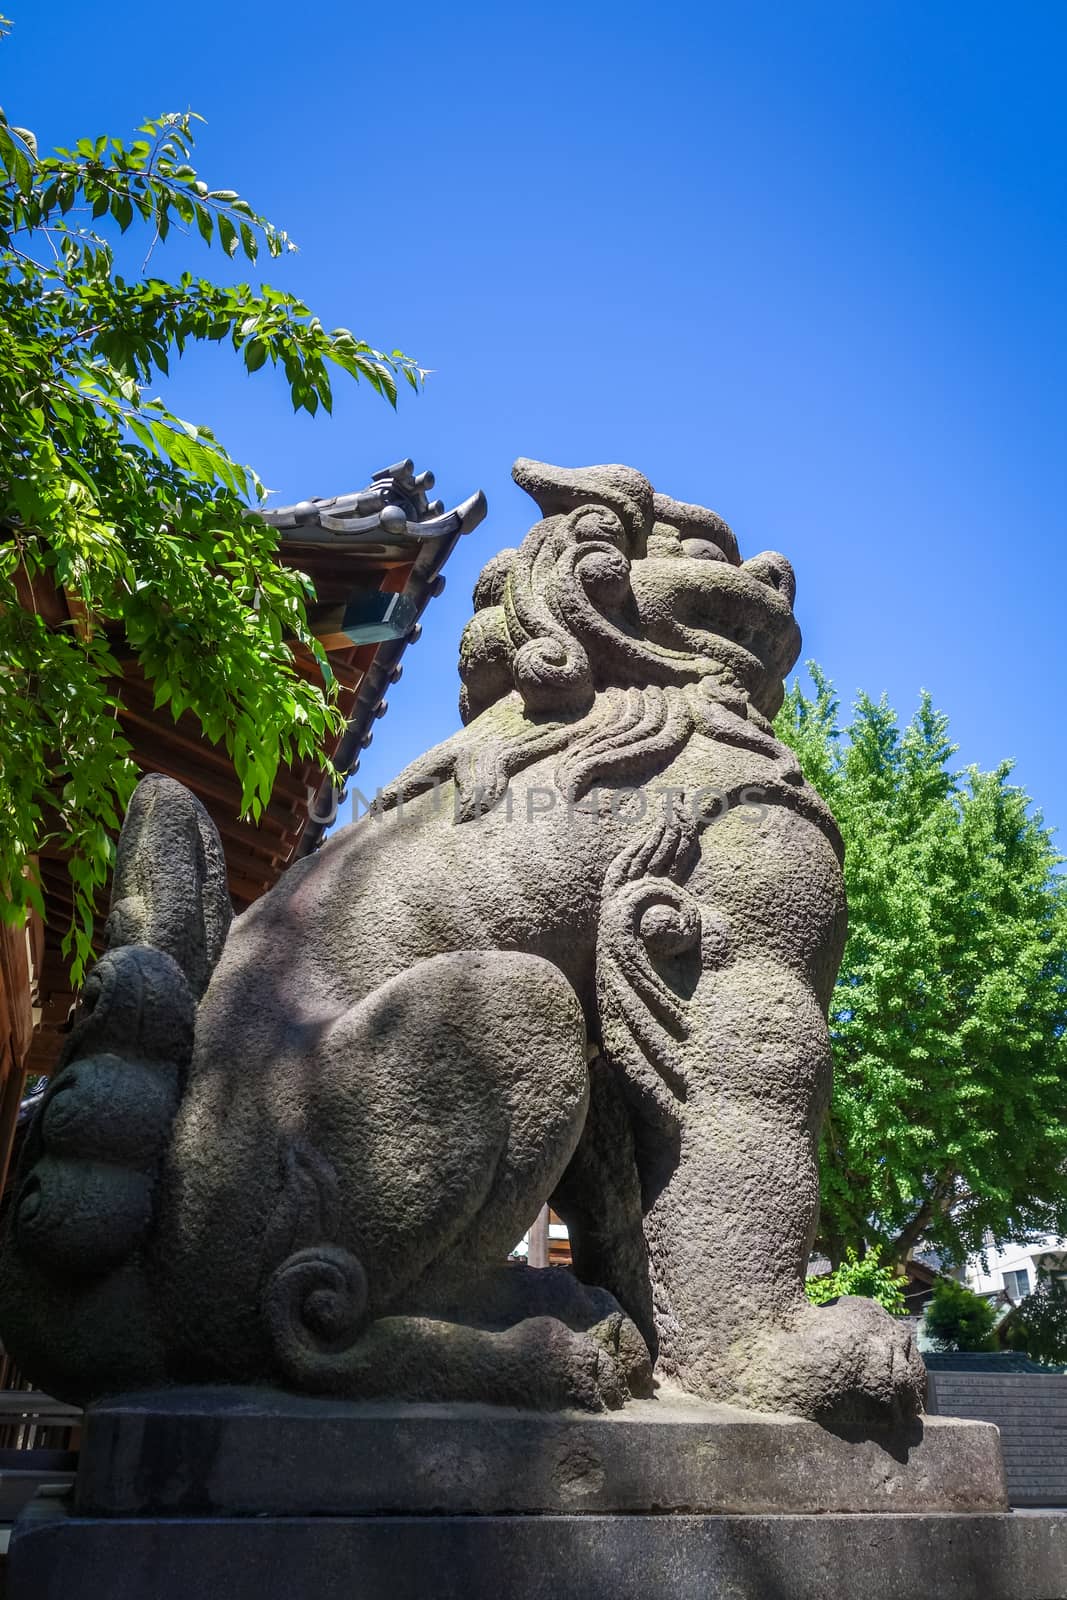 Lion statue in Ushijima Shrine temple, Tokyo, Japan by daboost